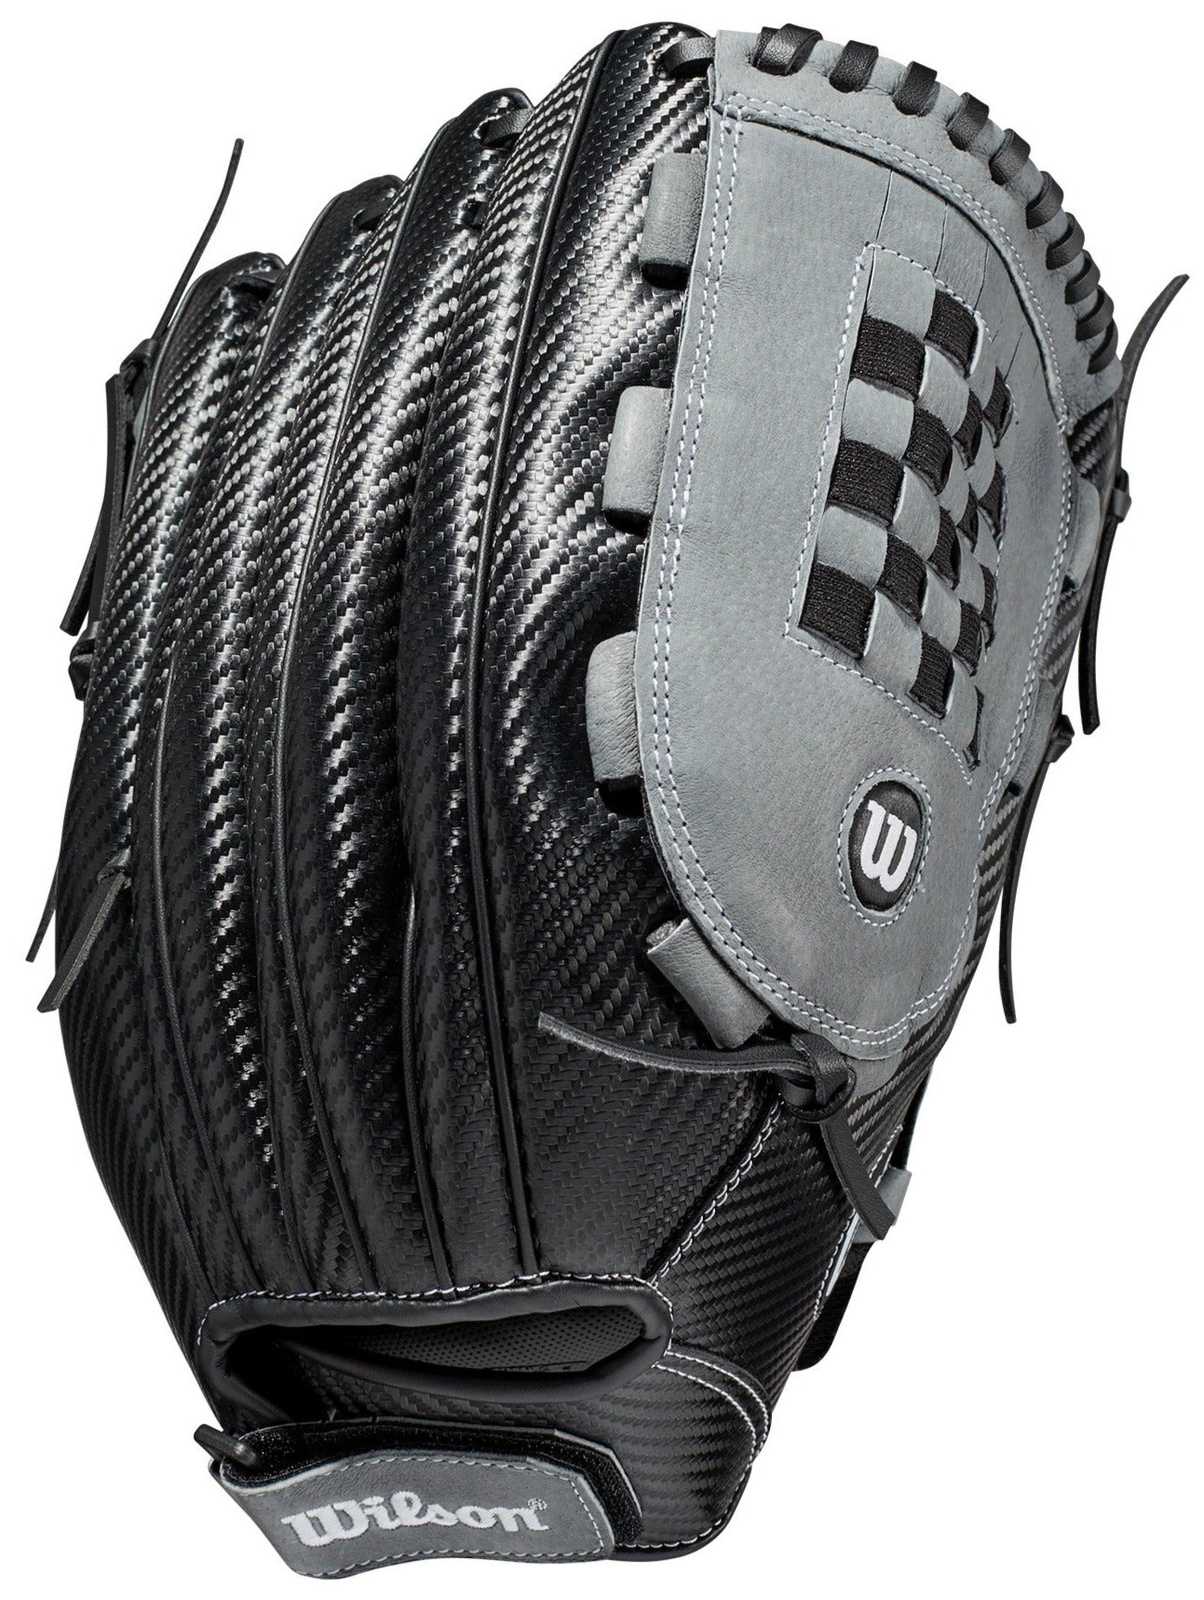 Wilson A360 SP13 13.00" Slowpitch Softball Glove - Black Gray - HIT A Double